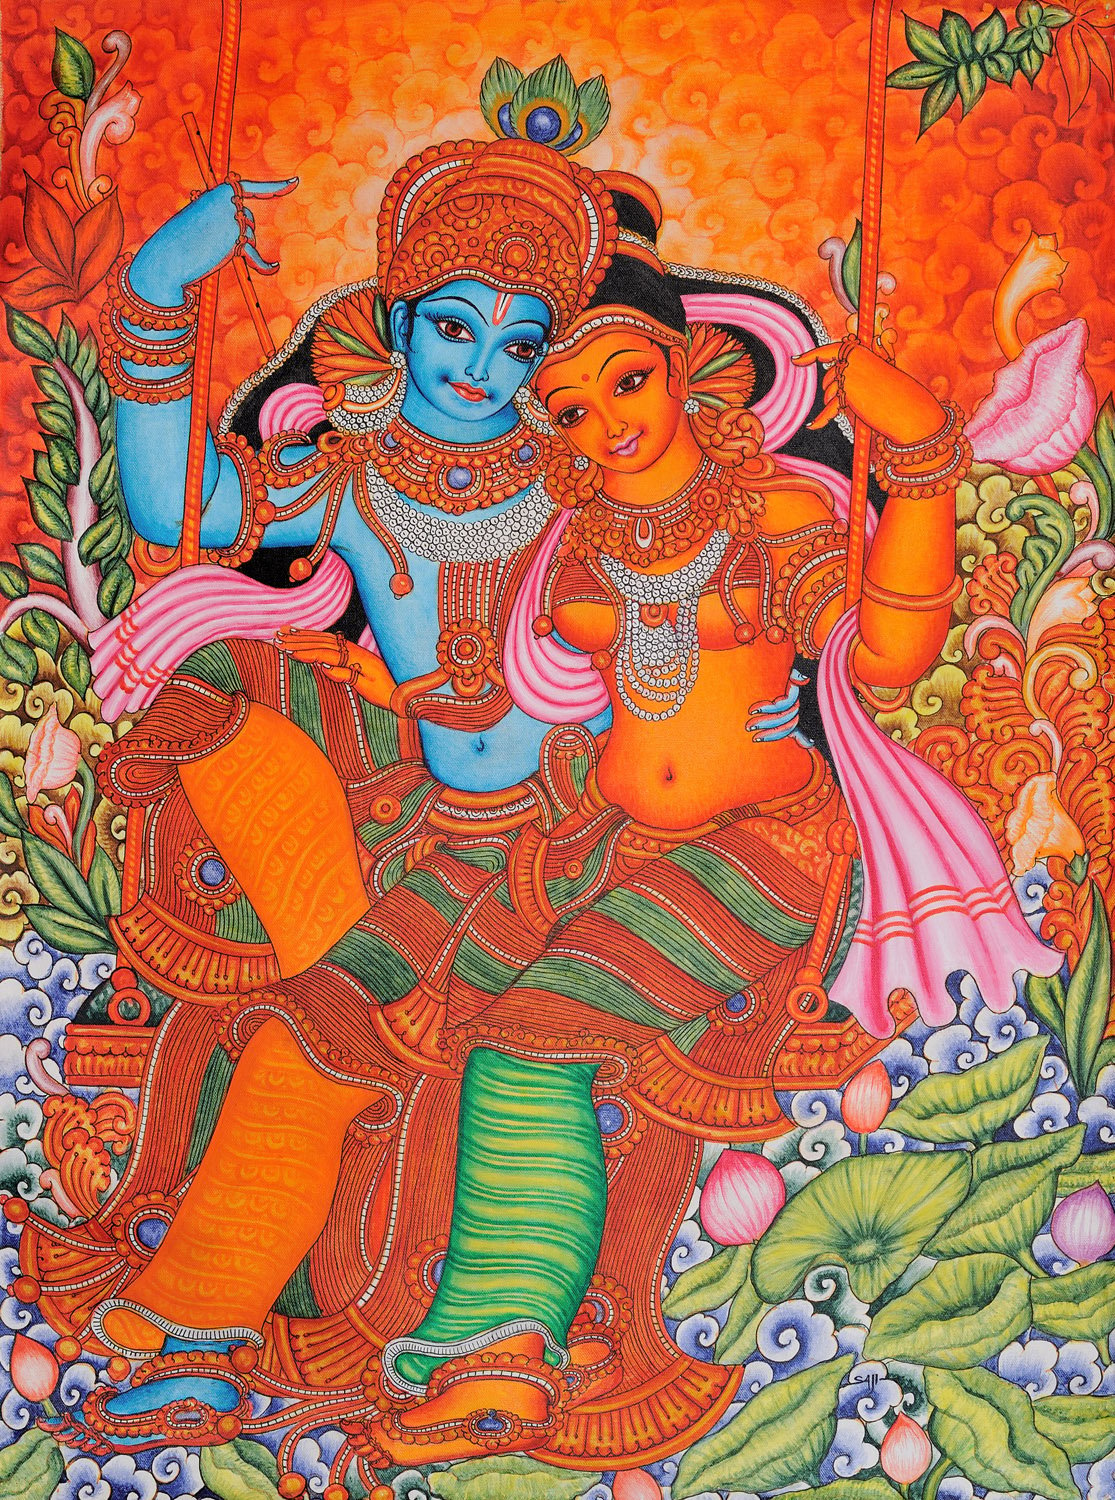 Radha And Krishna On Swing Kerala Folk Style Kerala Mural Painting My